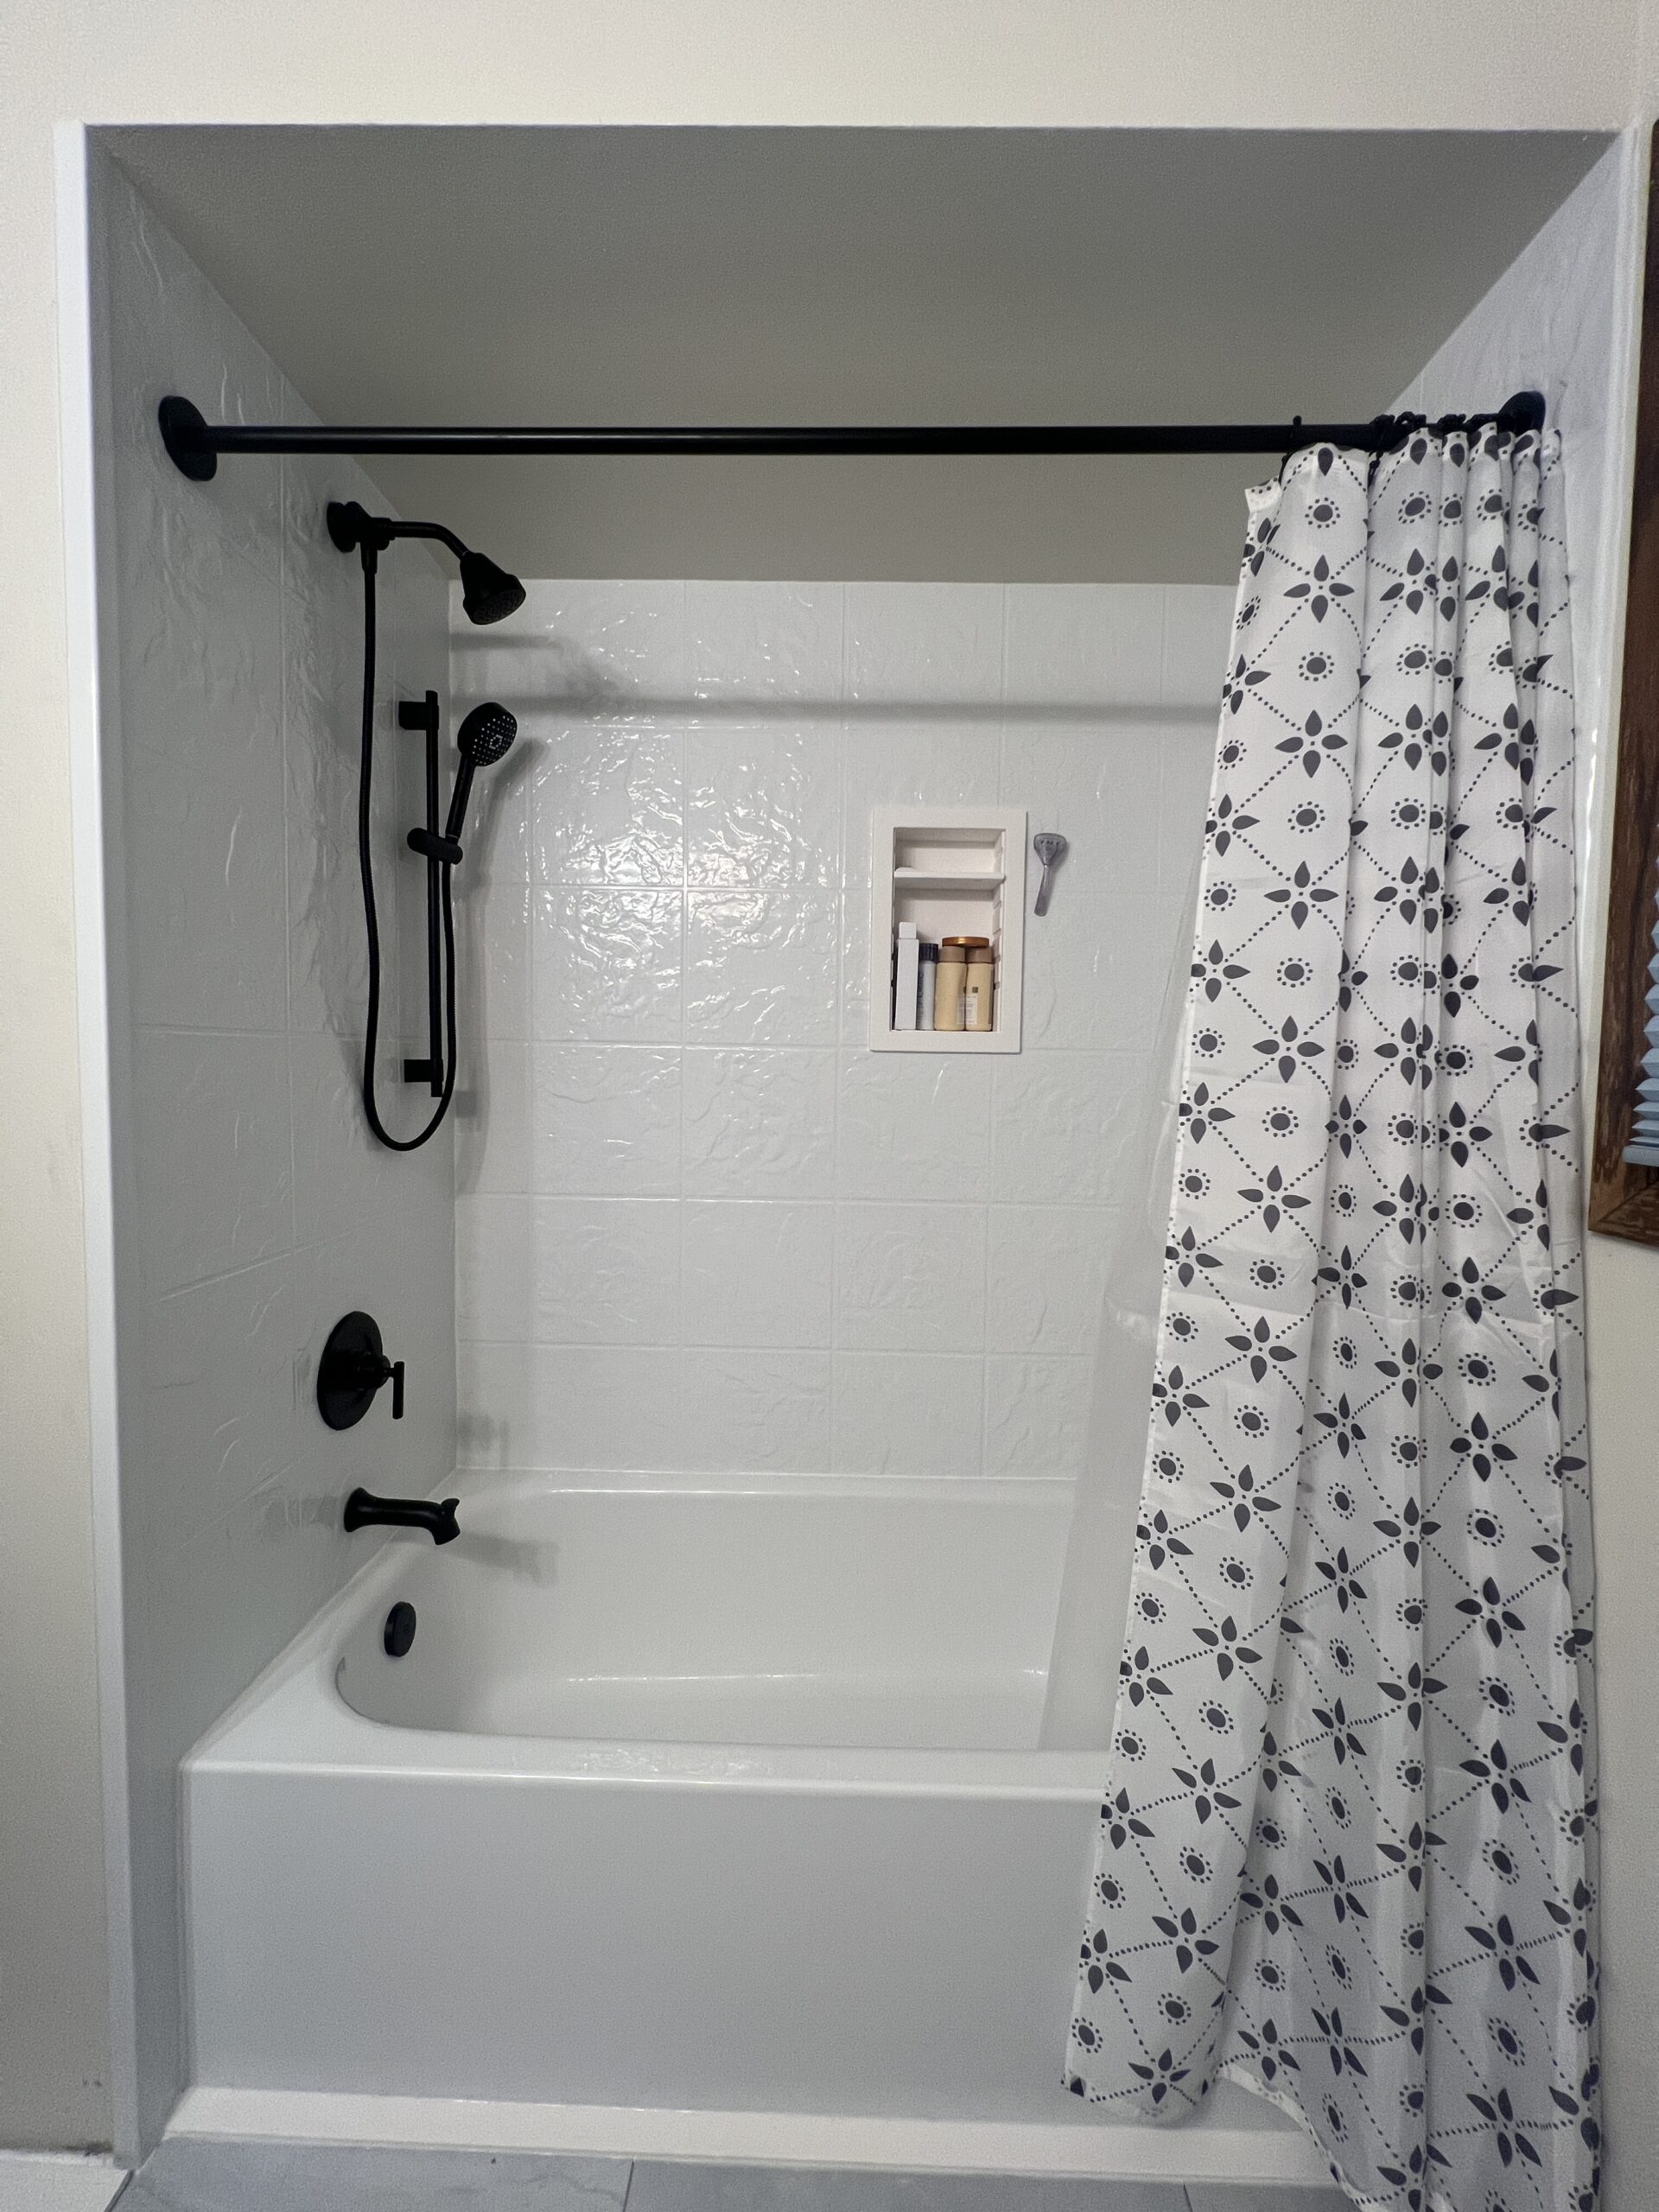 New white bathtub remodel with black hardware